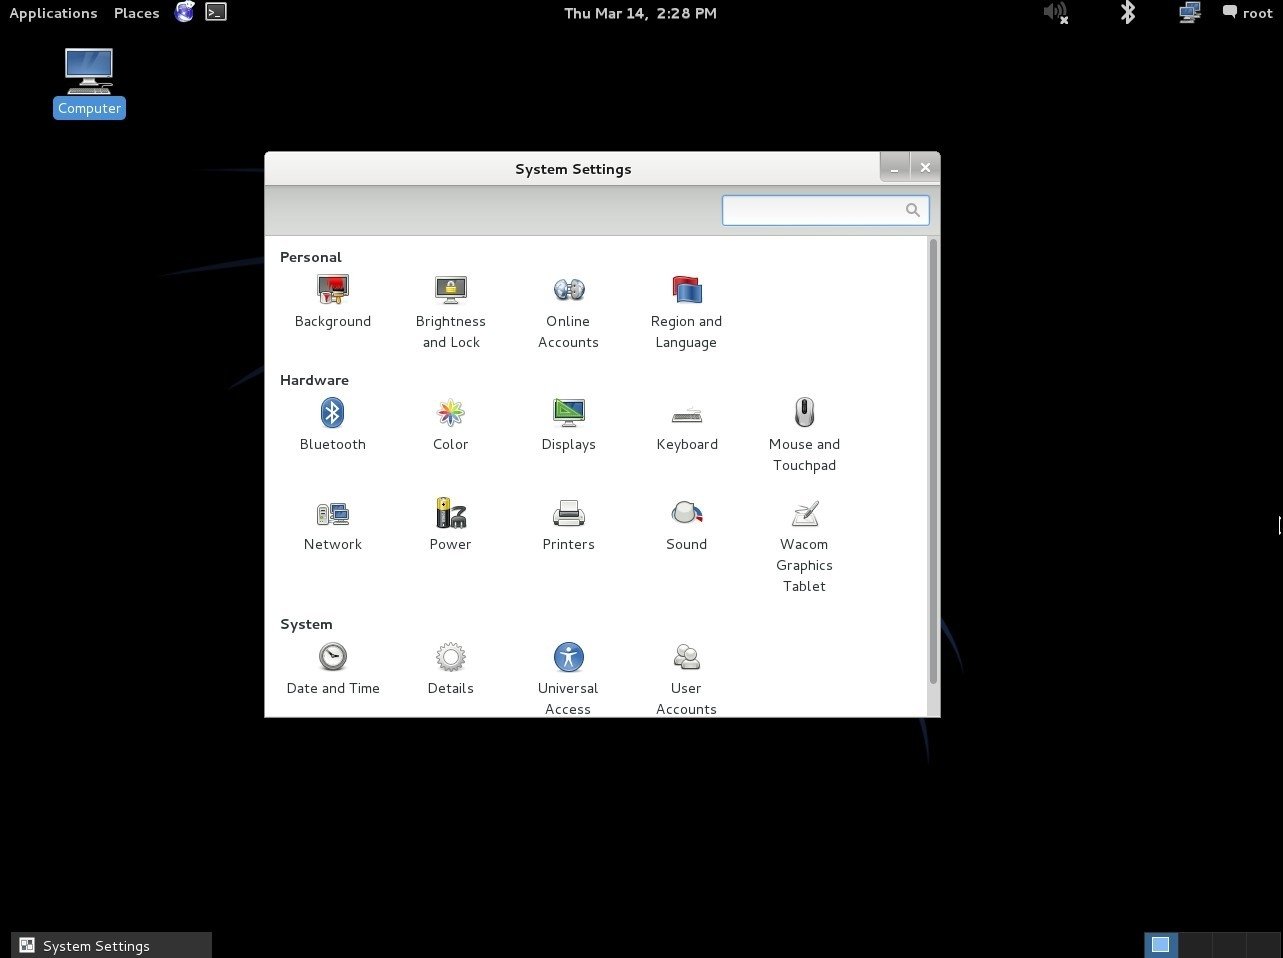 download kali linux virtual images